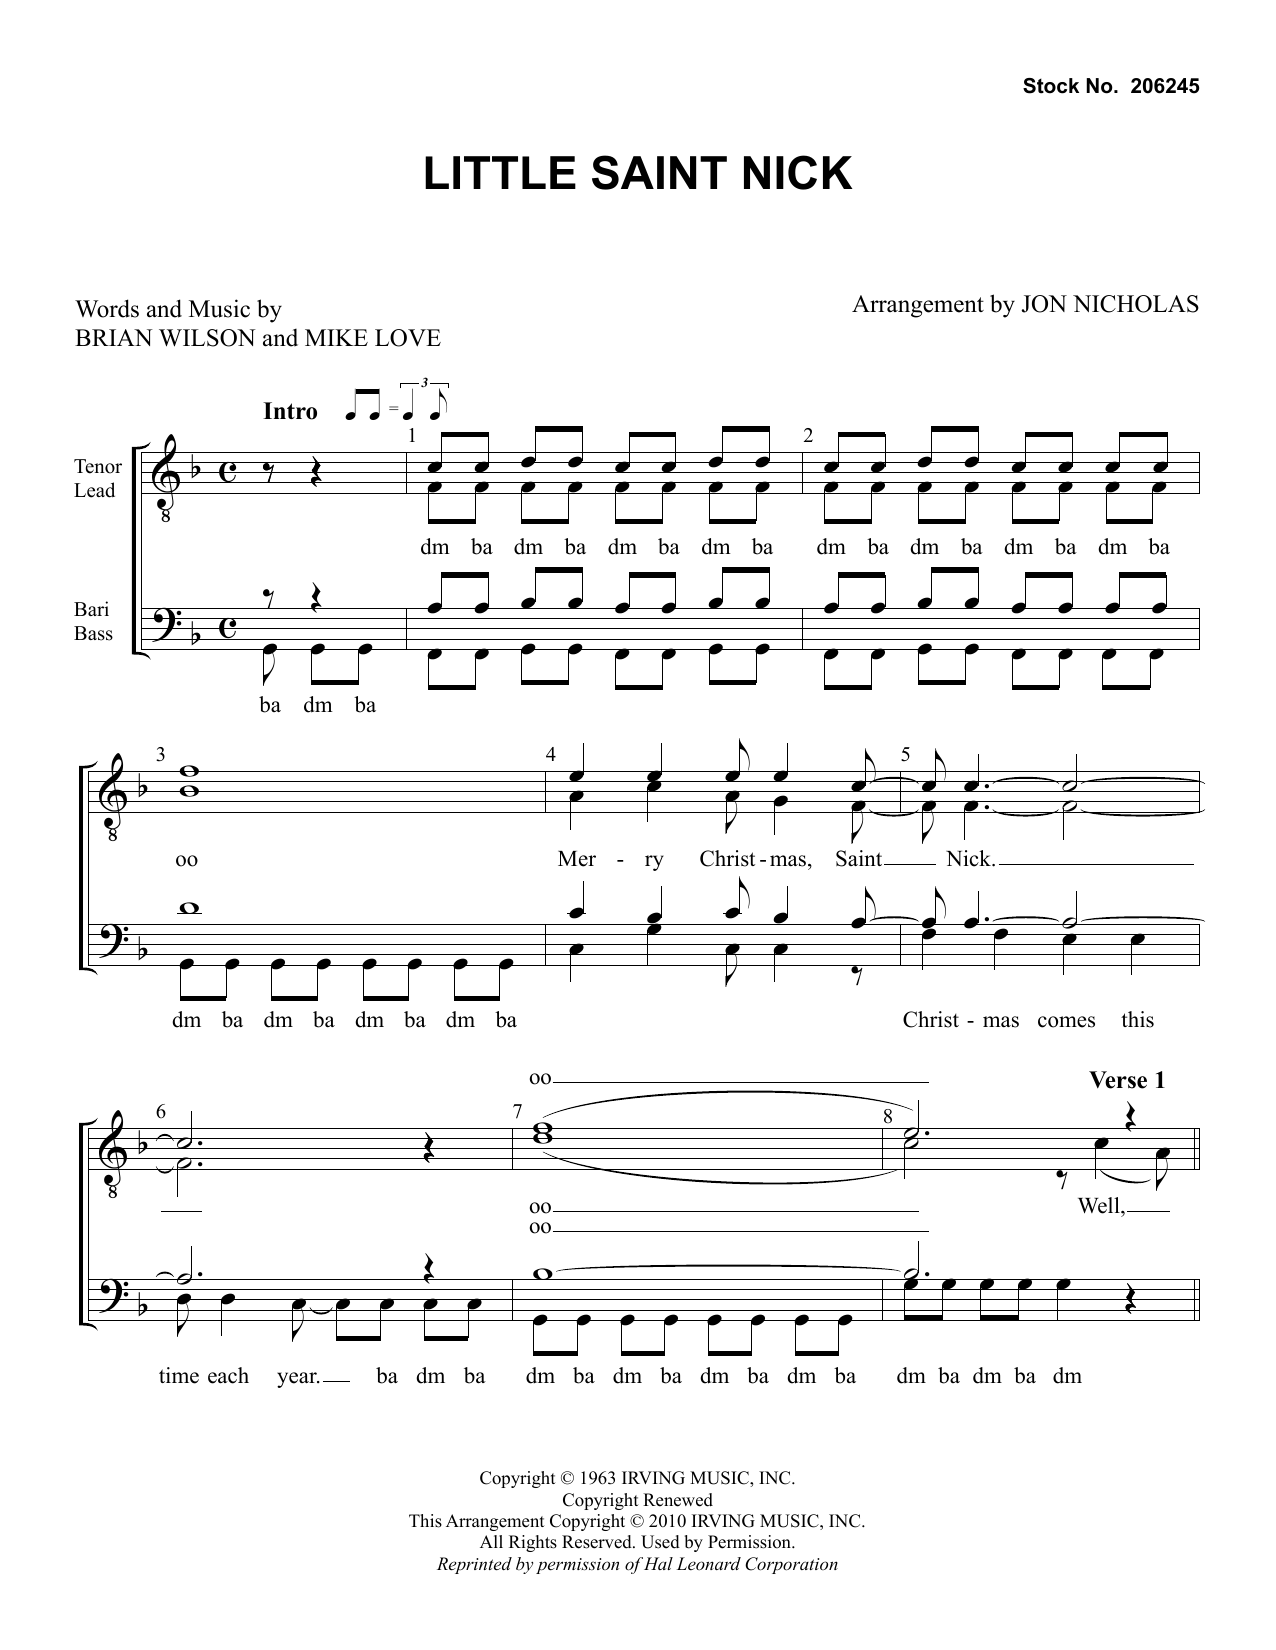 Download The Beach Boys Little Saint Nick (arr. Jon Nicholas) Sheet Music and learn how to play TTBB Choir PDF digital score in minutes